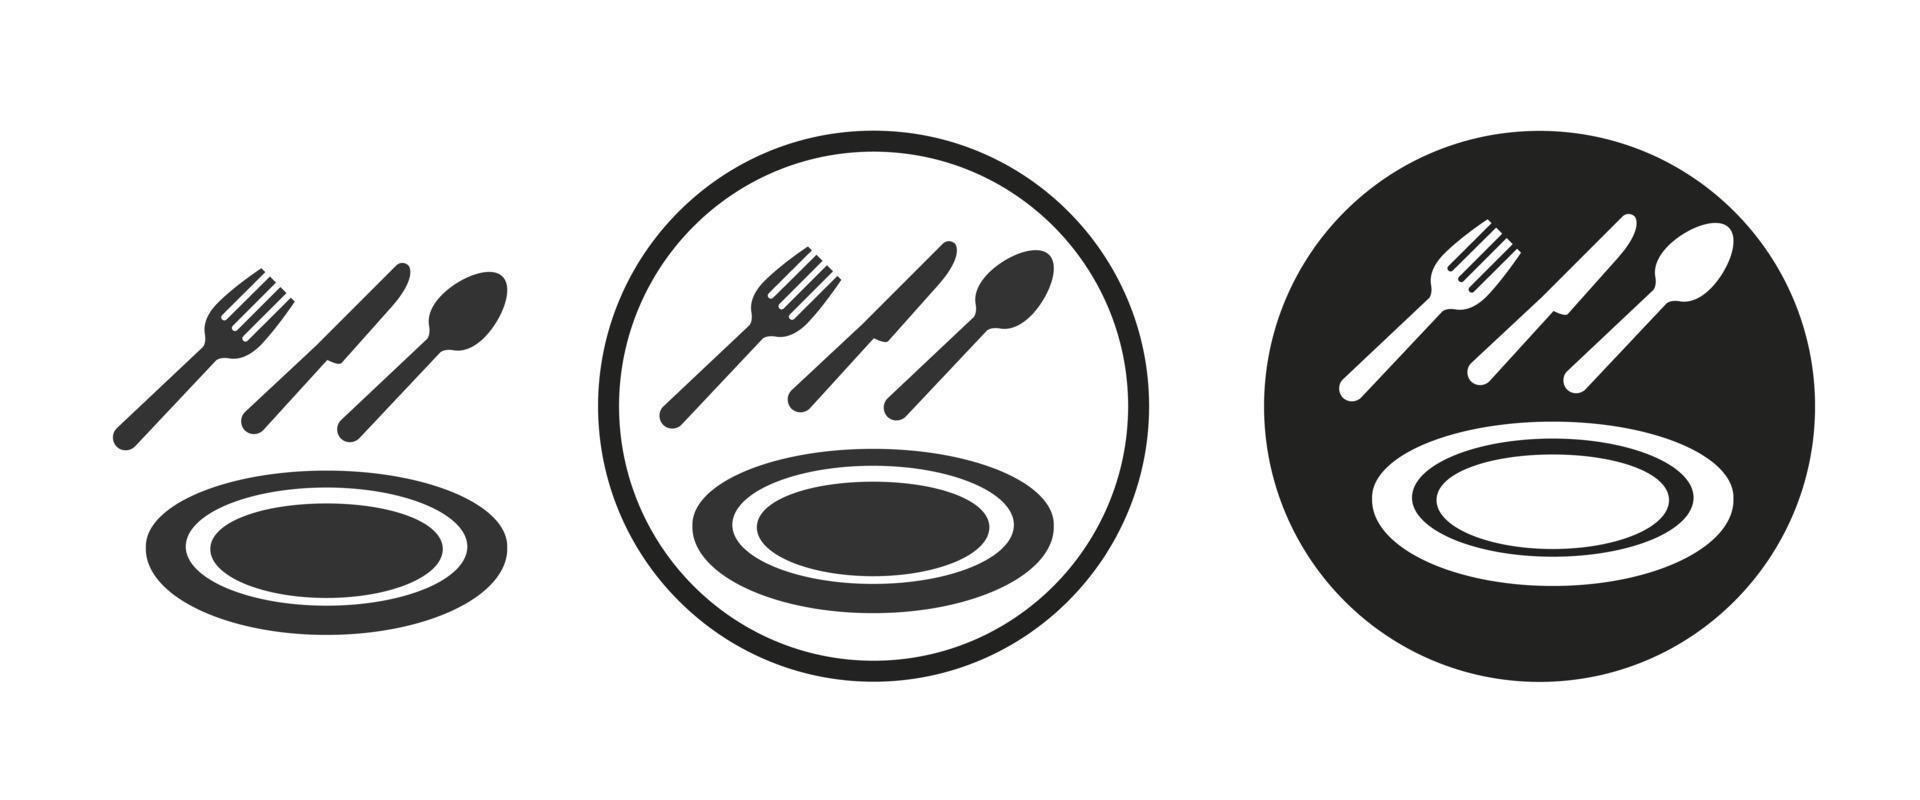 Fork Knife Spoon Dish  icon . web icon set .vector illustration vector